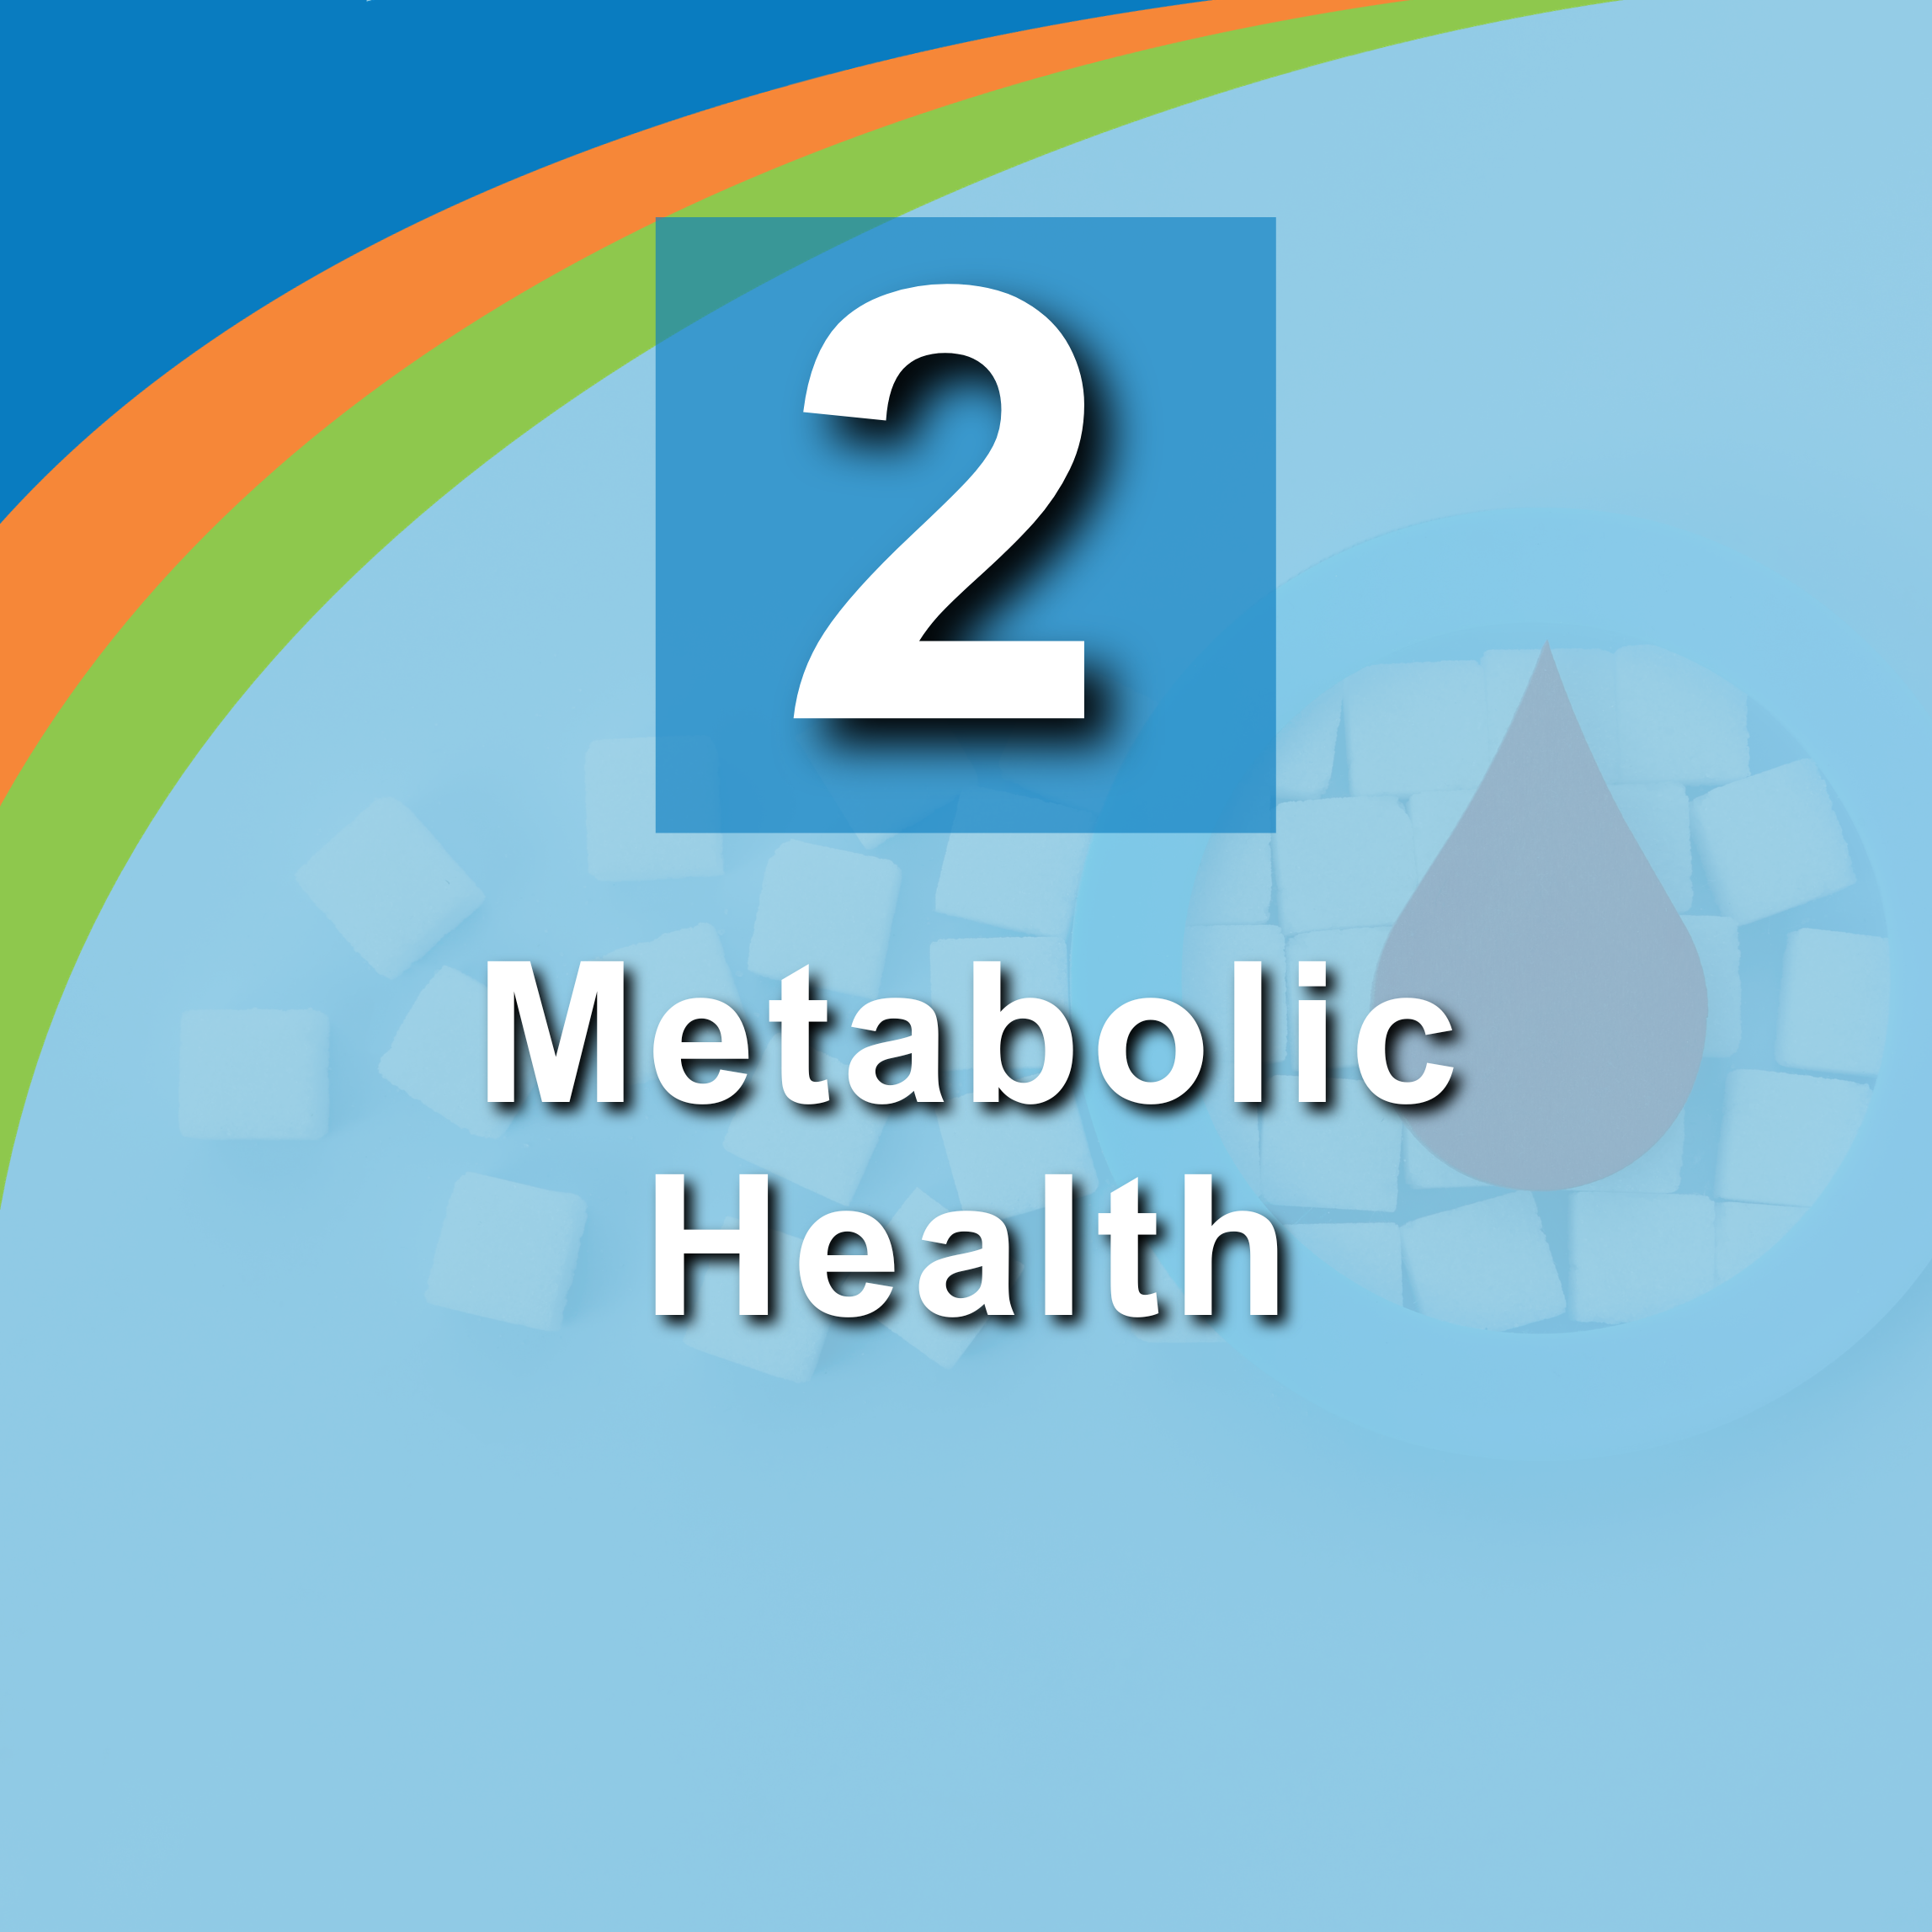 2. Metabolic Health